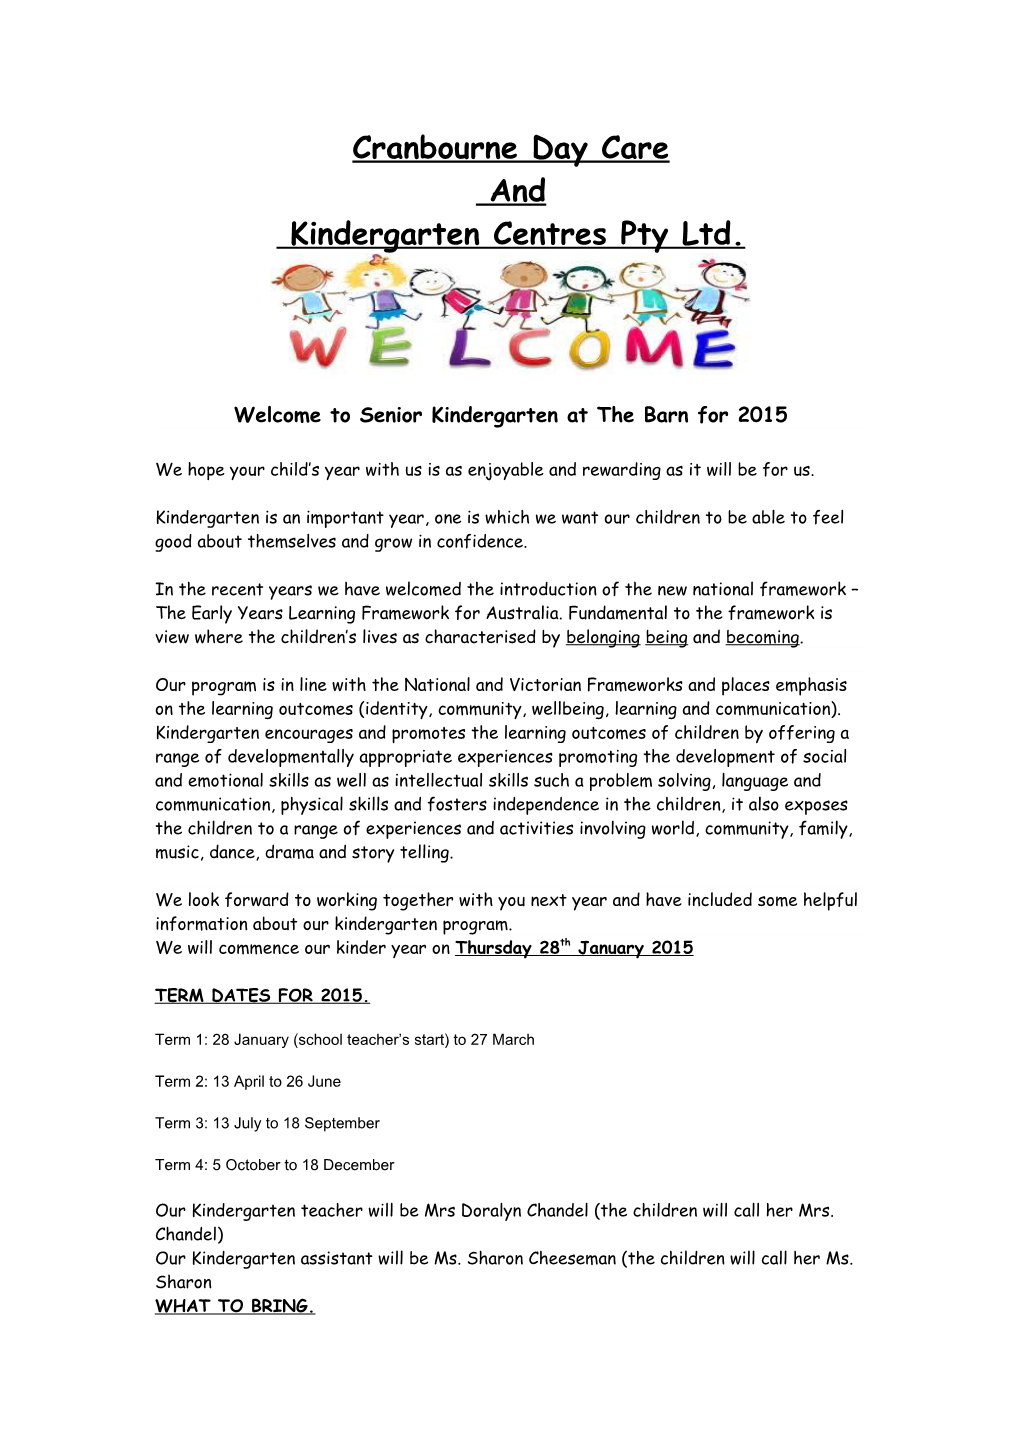 Cranbourne Daycare and Kindergarten Centres Pty Ltd